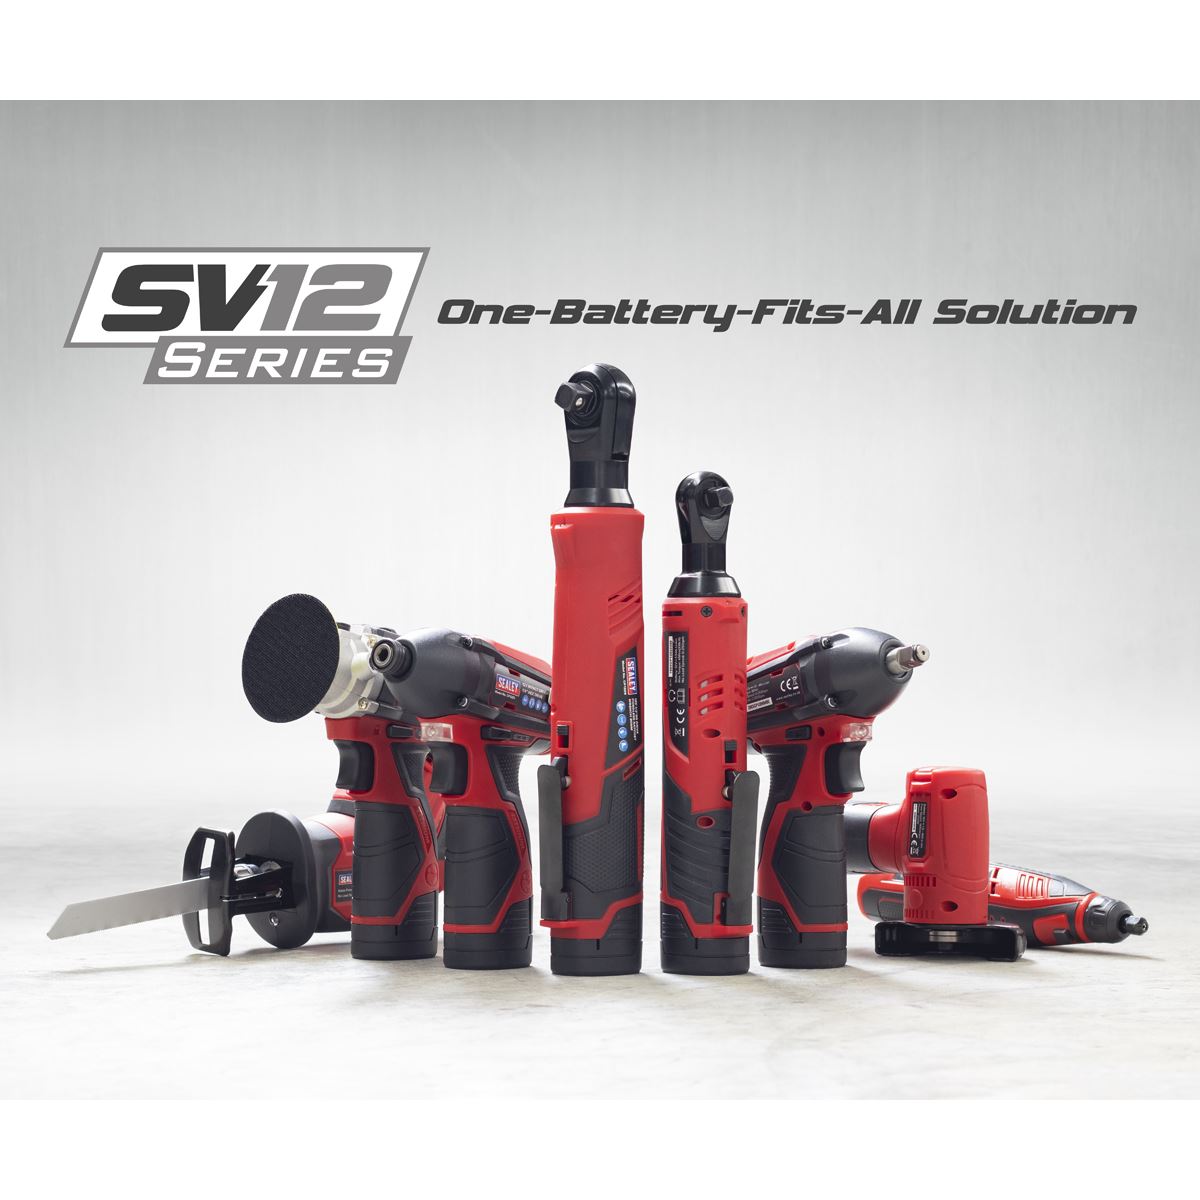 Sealey Impact Wrench Kit 3/8"Sq Drive 12V SV12 Series - 2 Batteries